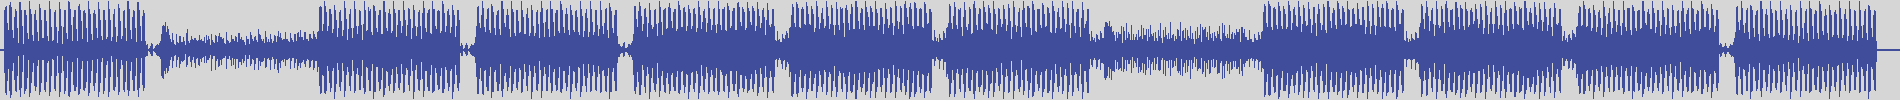 atomic_recordings [AR012] Dance 222 - Trans-g [Express Mix] audio wave form